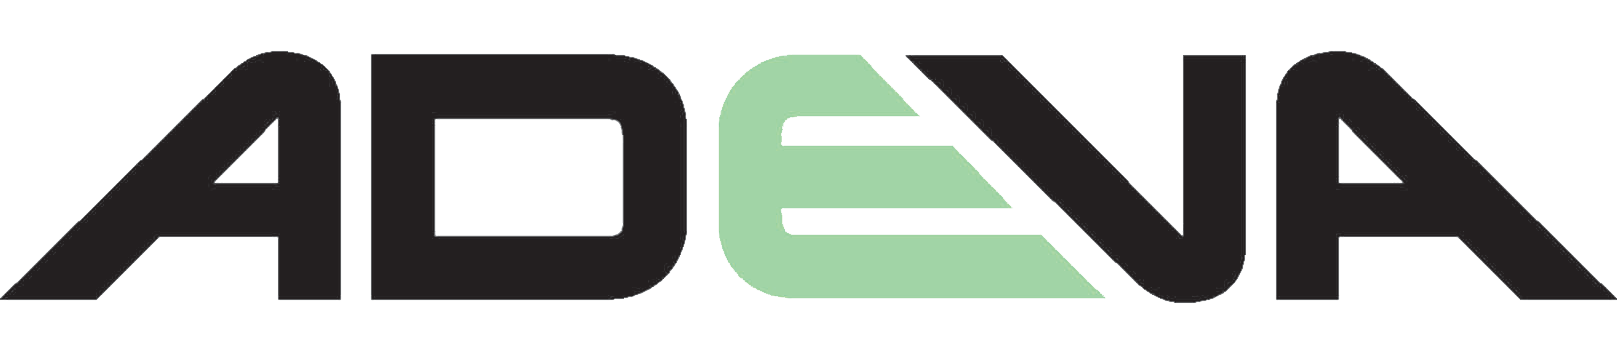 logo.png, 62kB